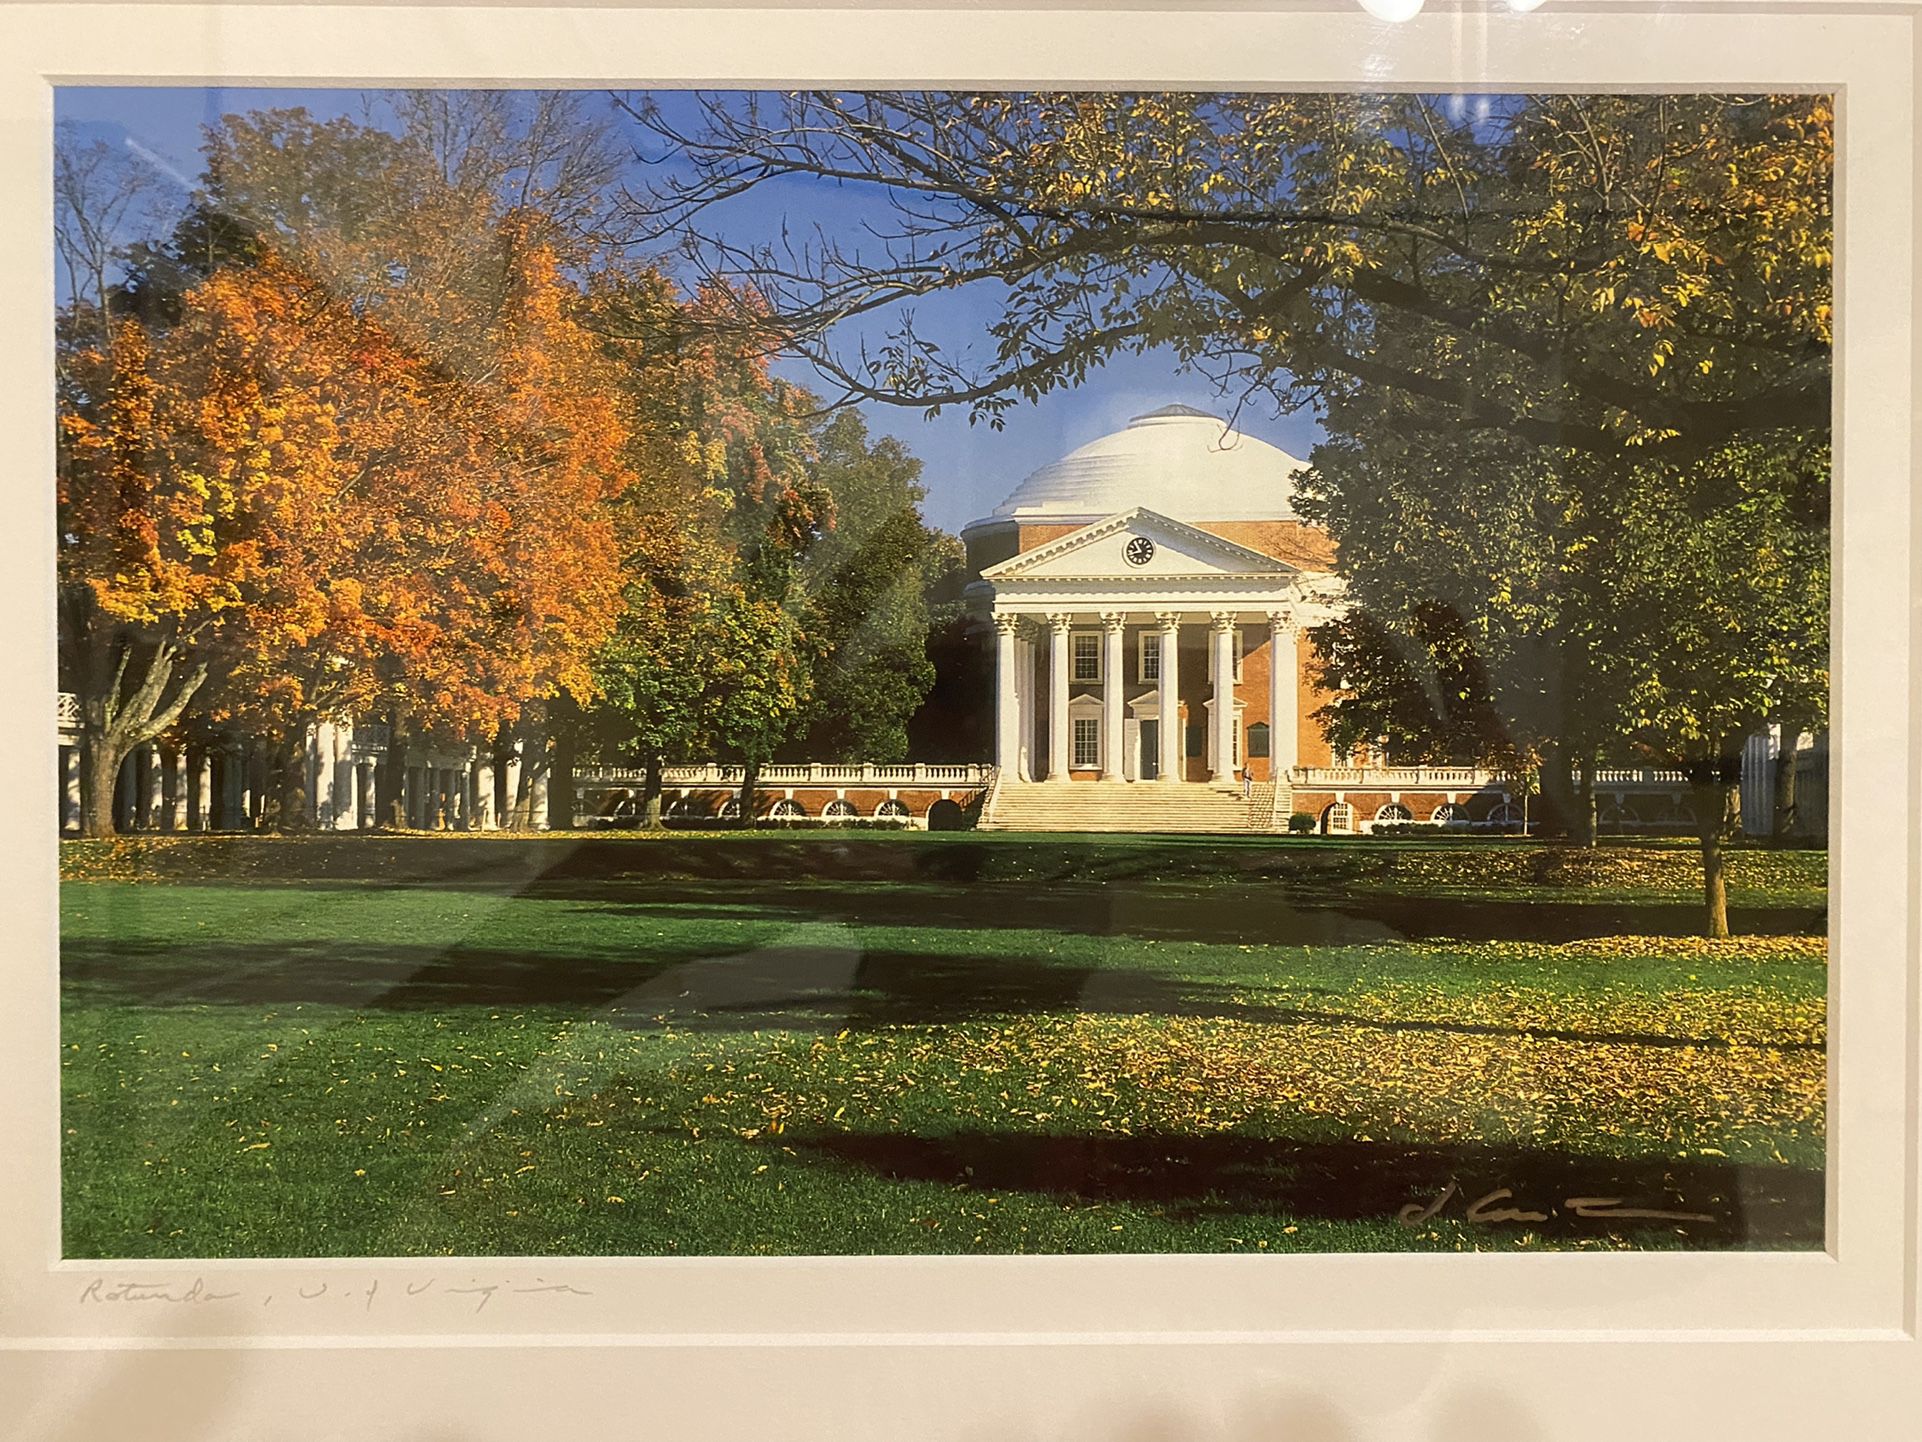 University of Virginia rotunda framed photograph